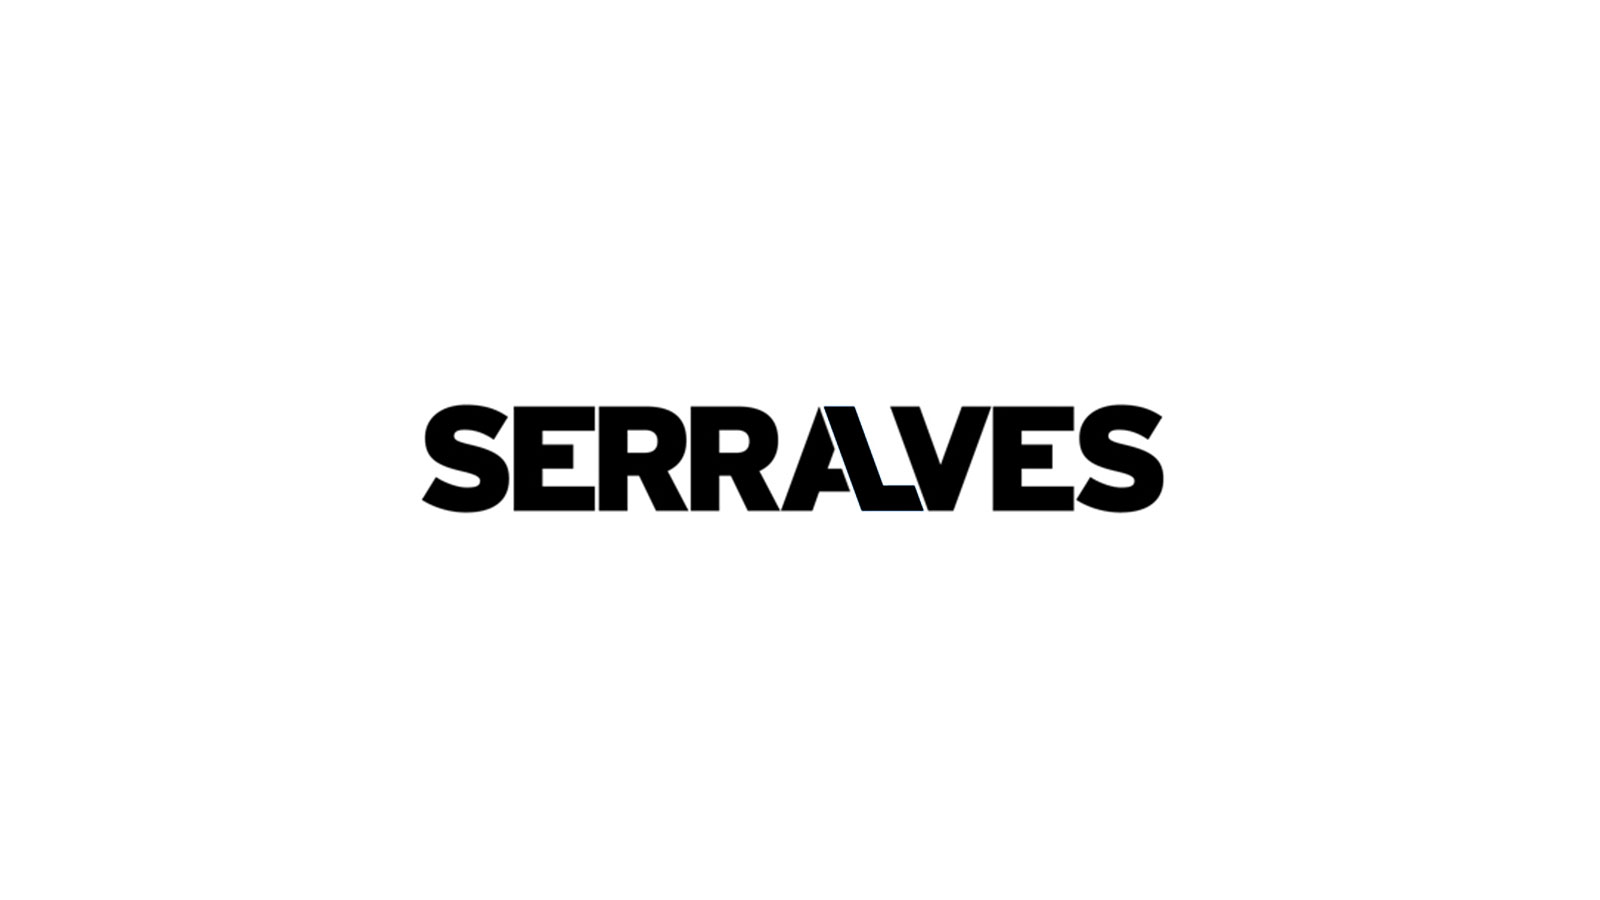 Copy of Serralves logo